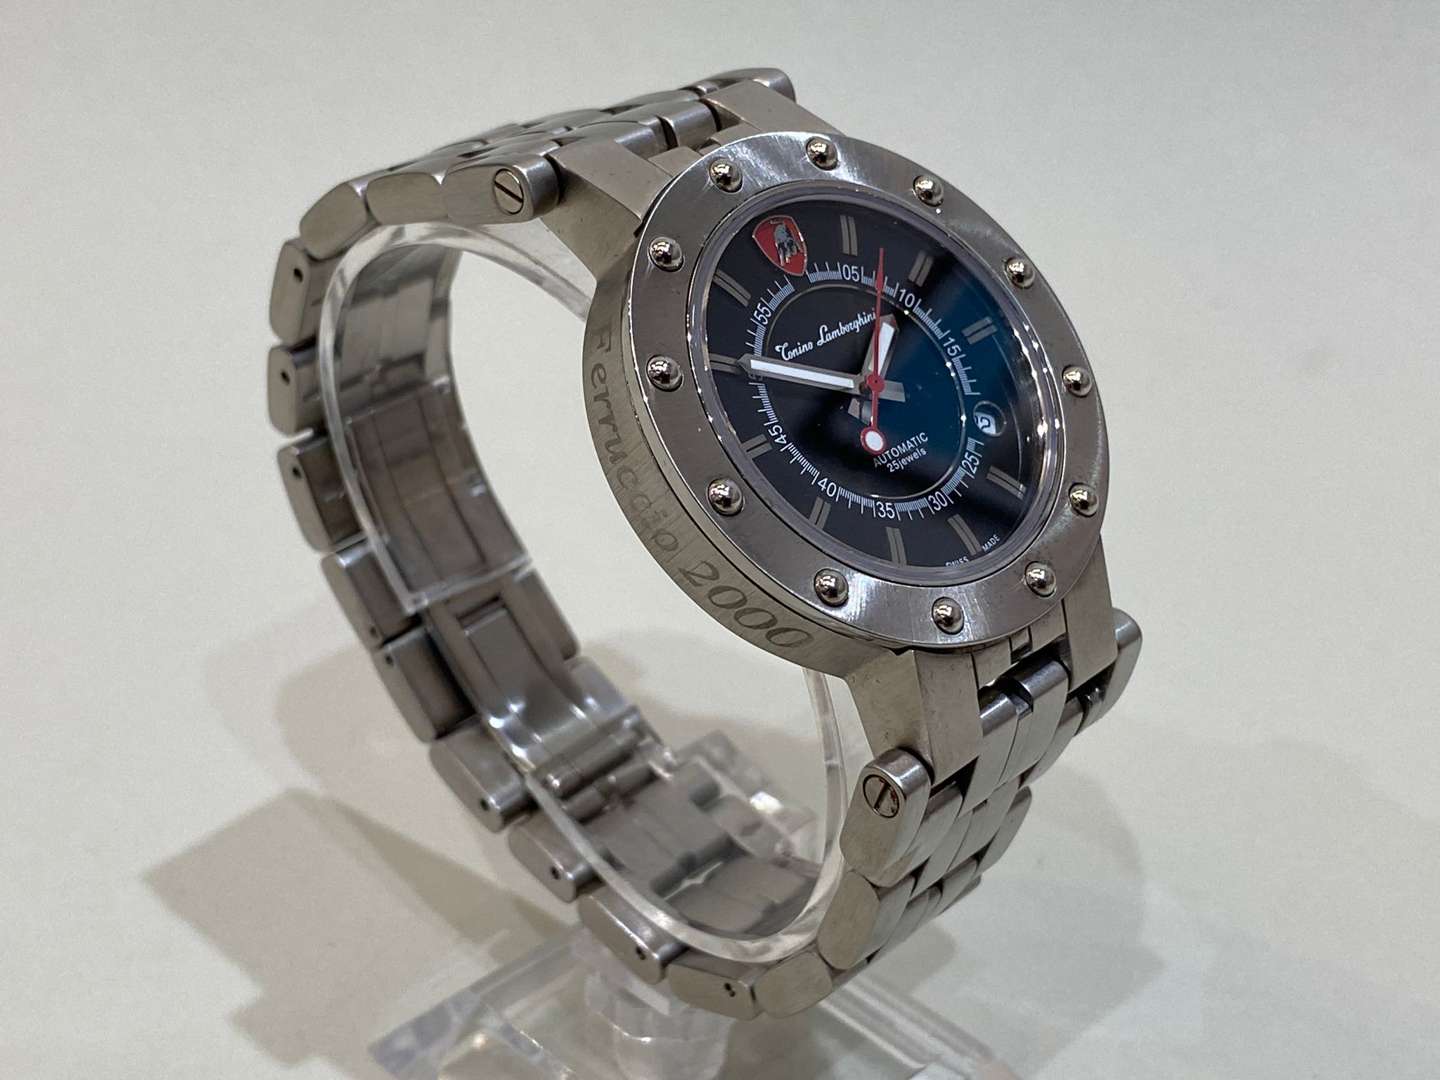 <p>TONINO LAMBORGHINI, FERRUCCIO 2000, a stainless steel, automatic, centre seconds, calendar watch,</p>